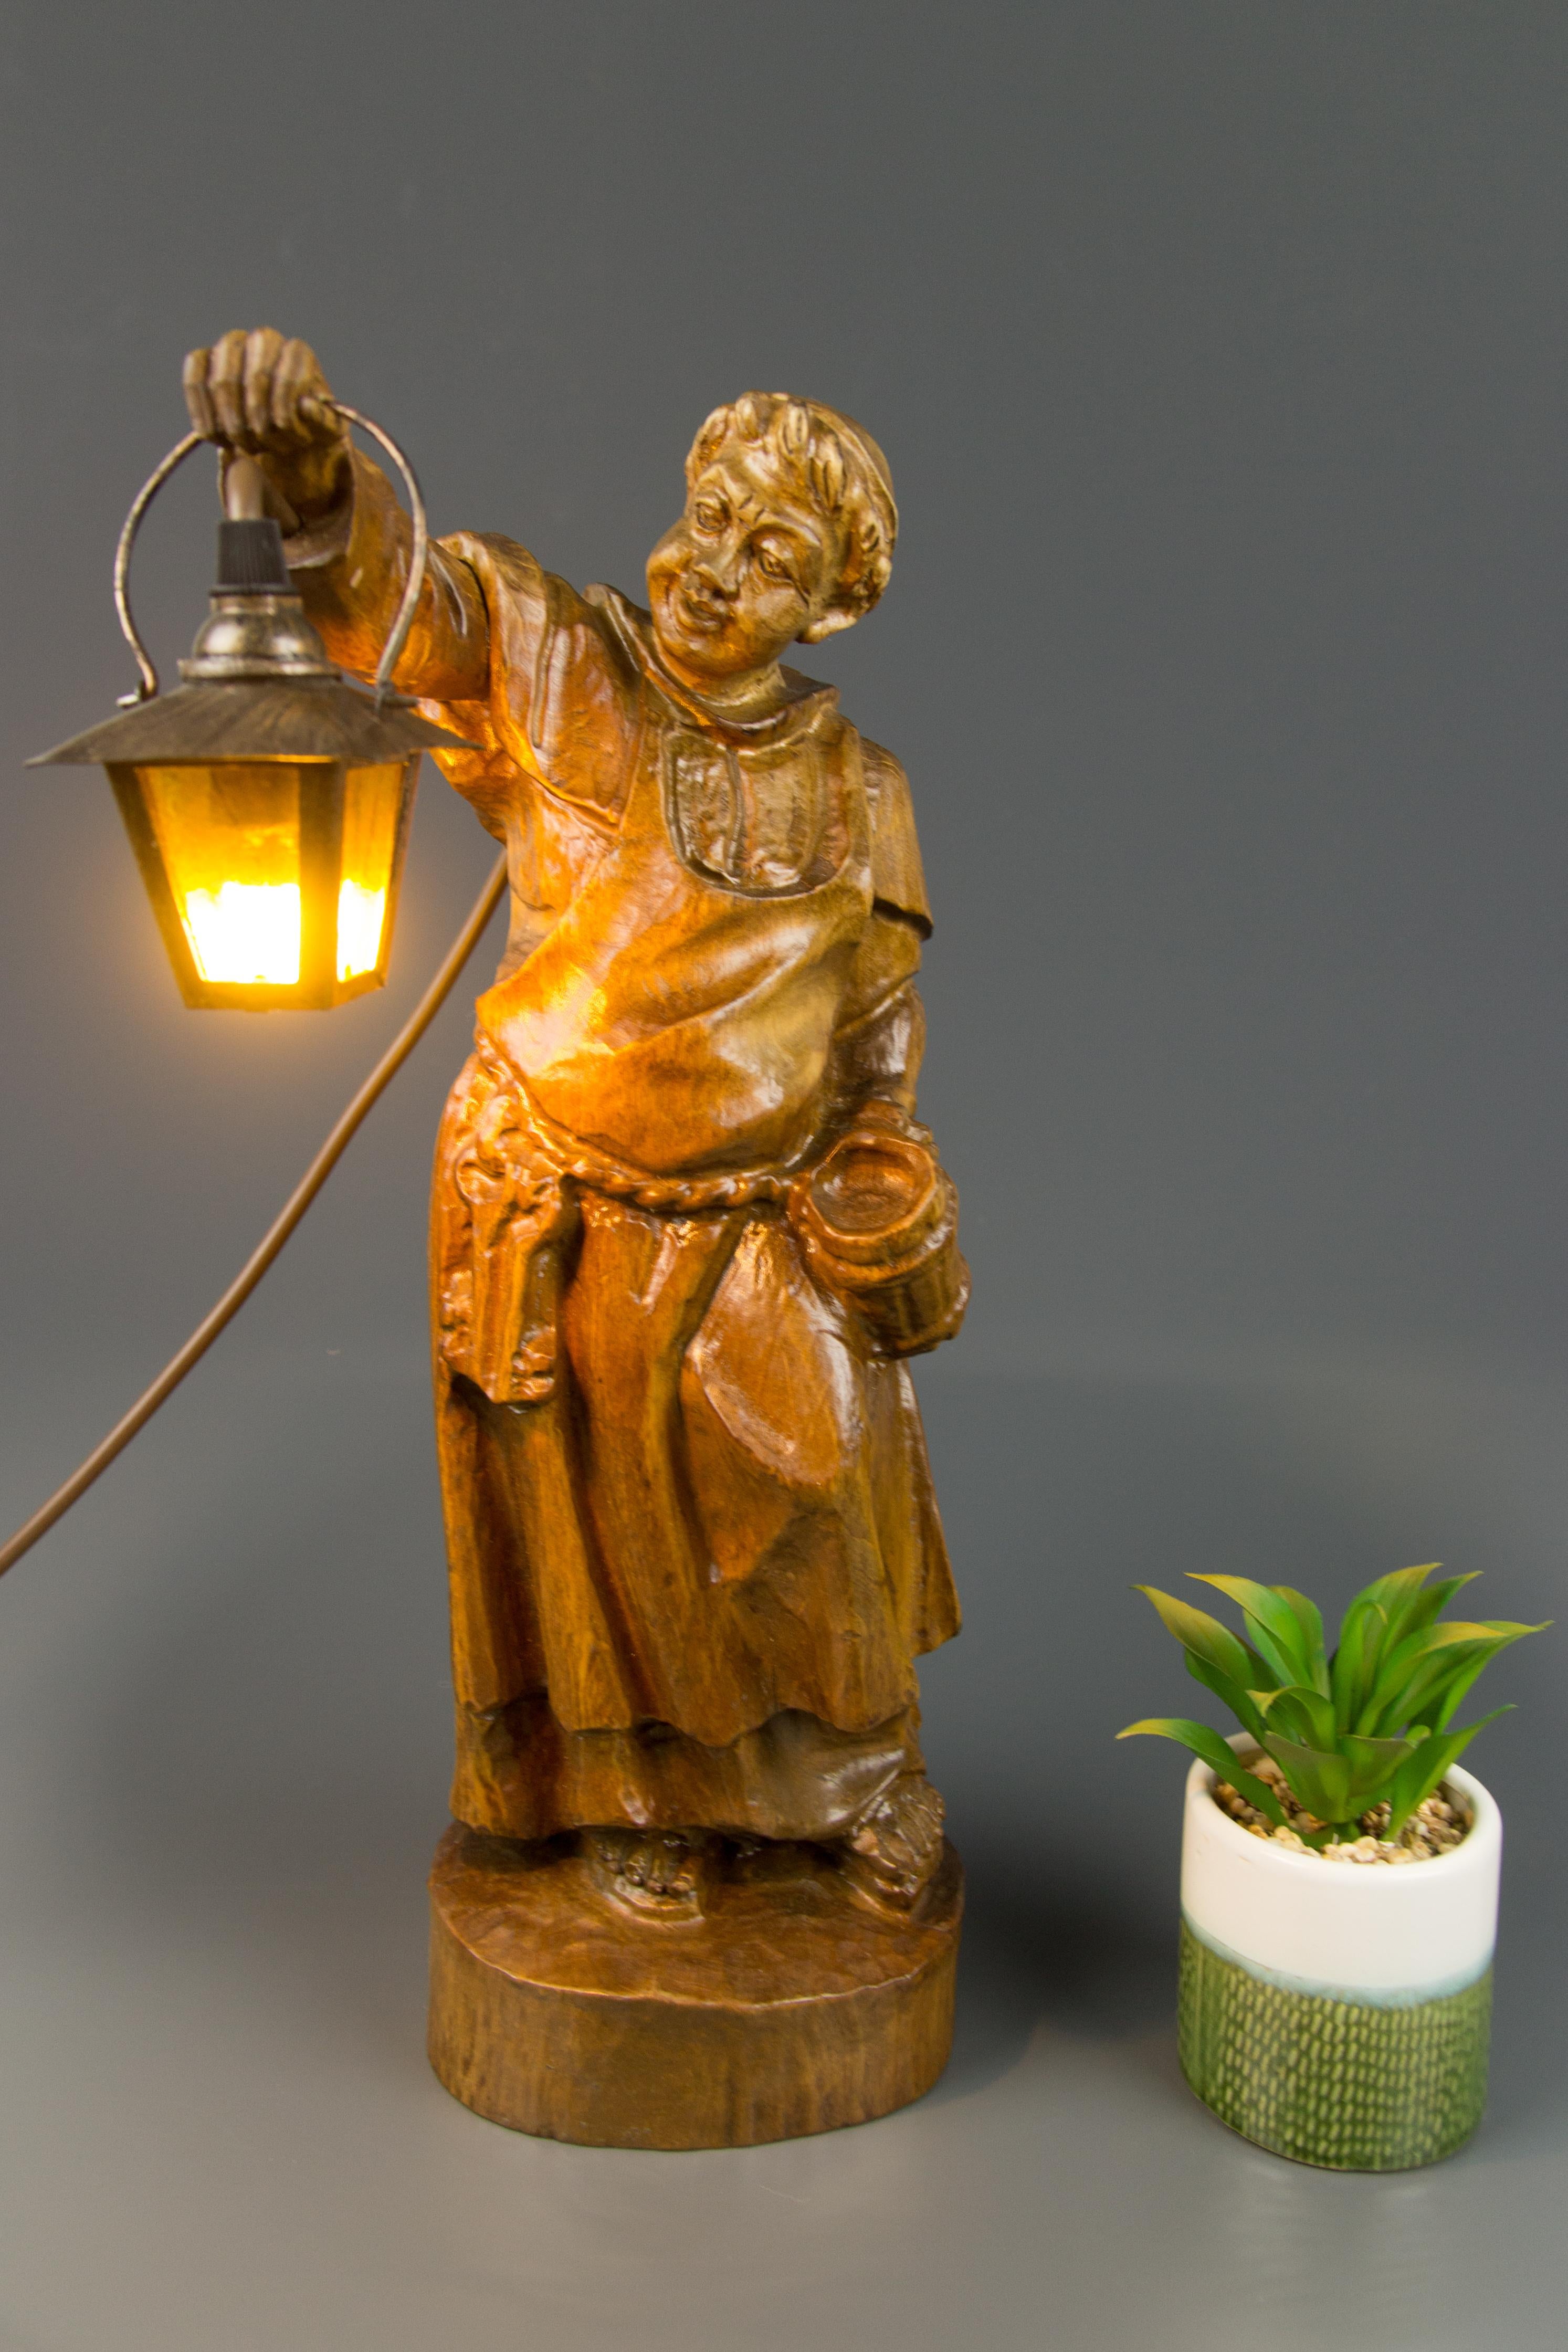 Folk Art German Hand Carved Wooden Sculpture Figurative Lamp Monk with Lantern